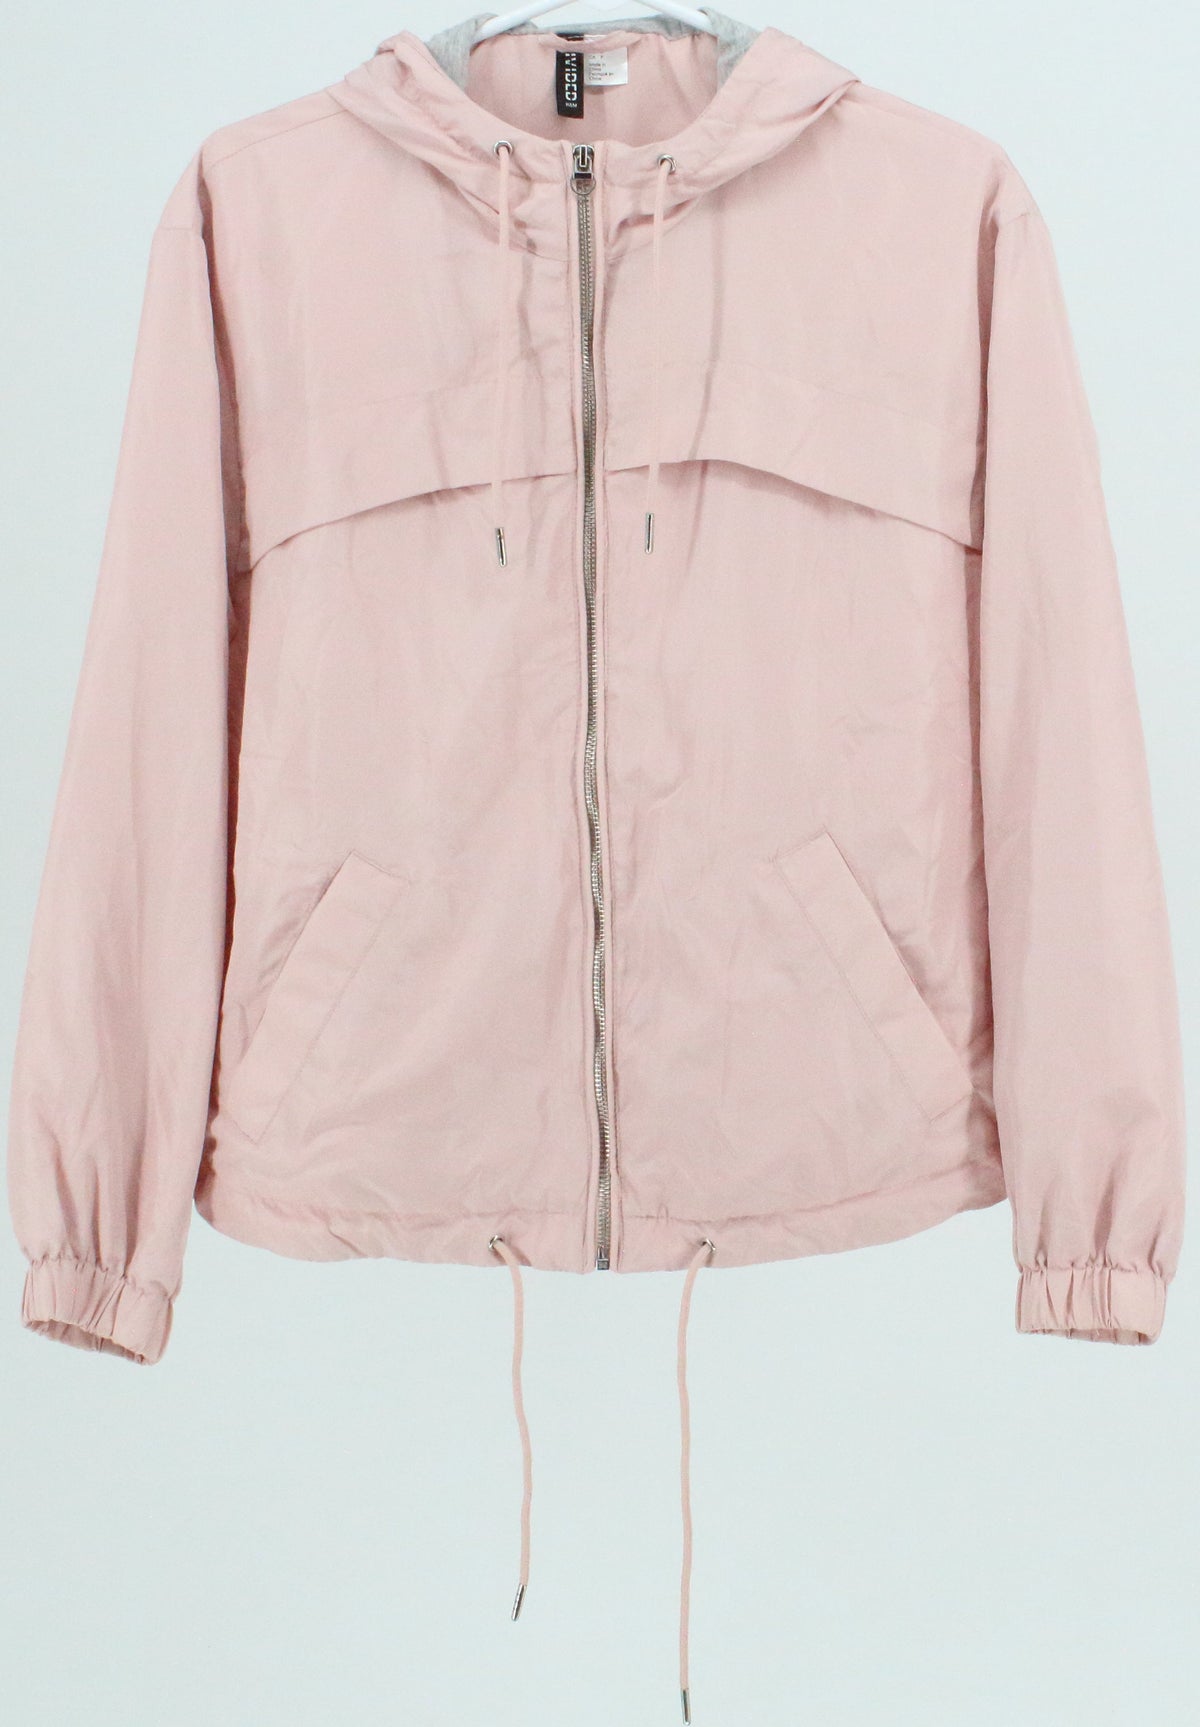 H&M Divided Light Pink Hooded Jacket